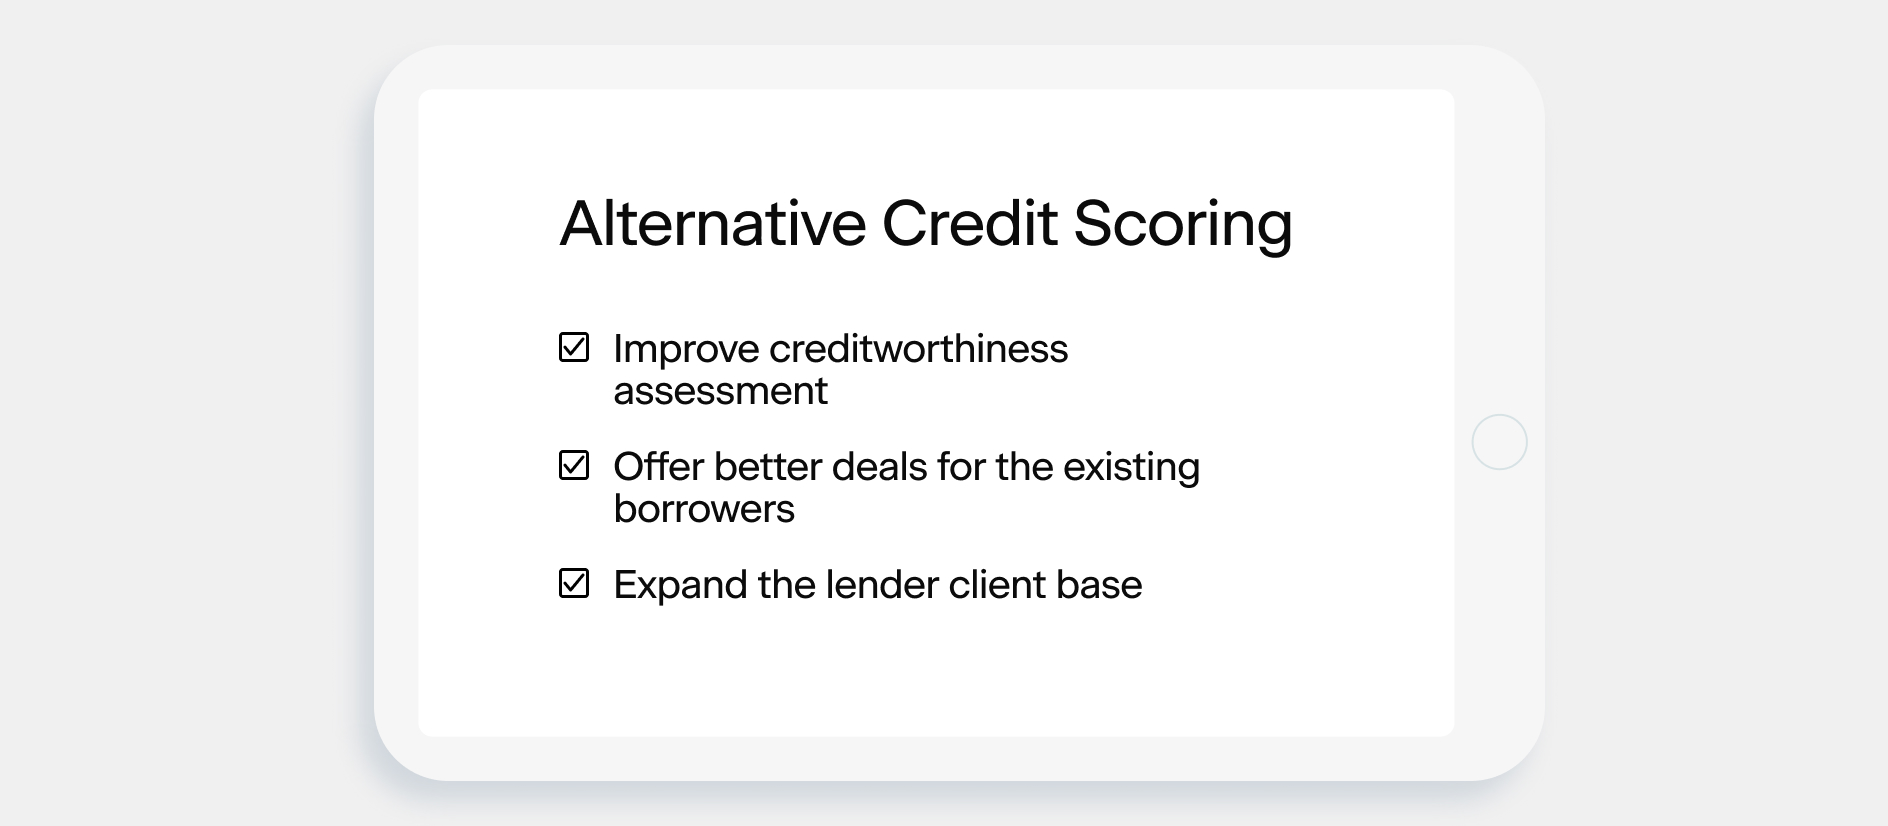 Benefits of Alternative Credit Scoring